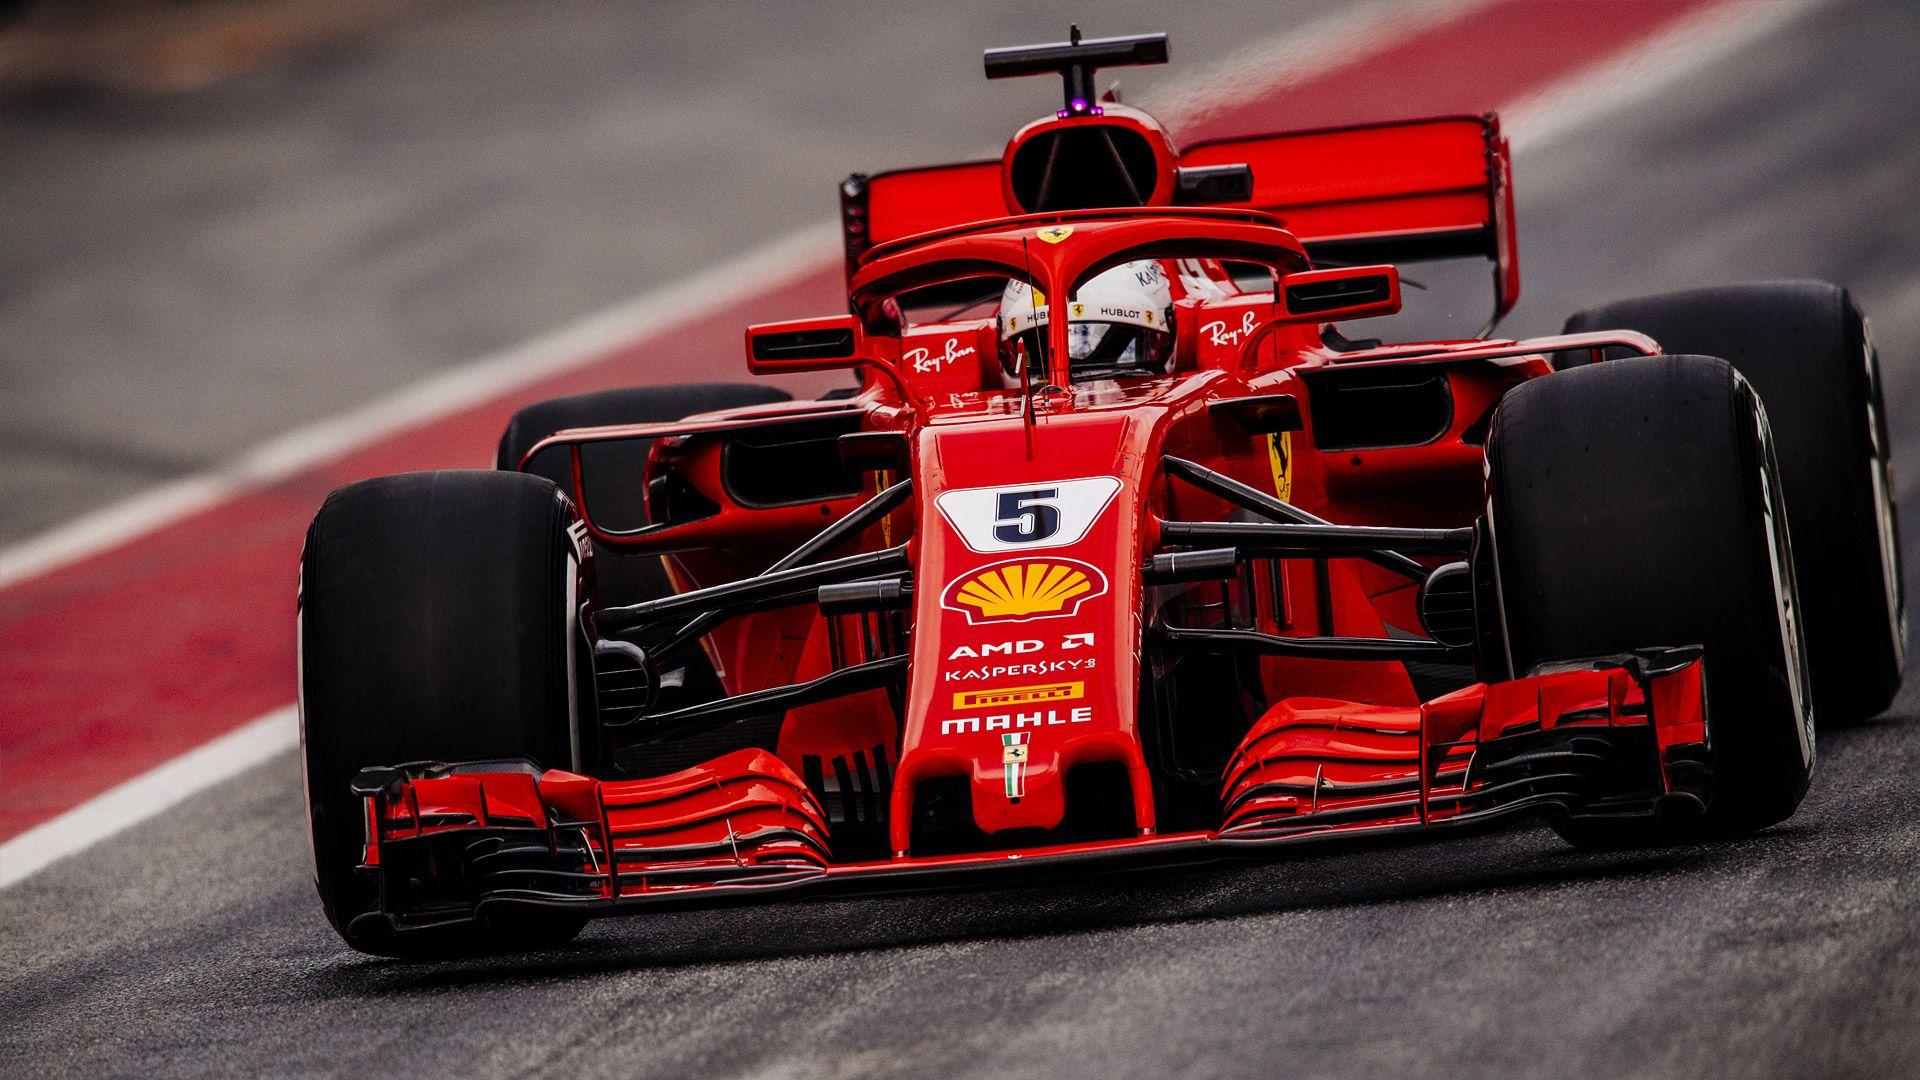  Formel 1 Autos Hintergrundbild 1920x1080. Ferrari F1 2018 Wallpaper Free Ferrari F1 2018 Background